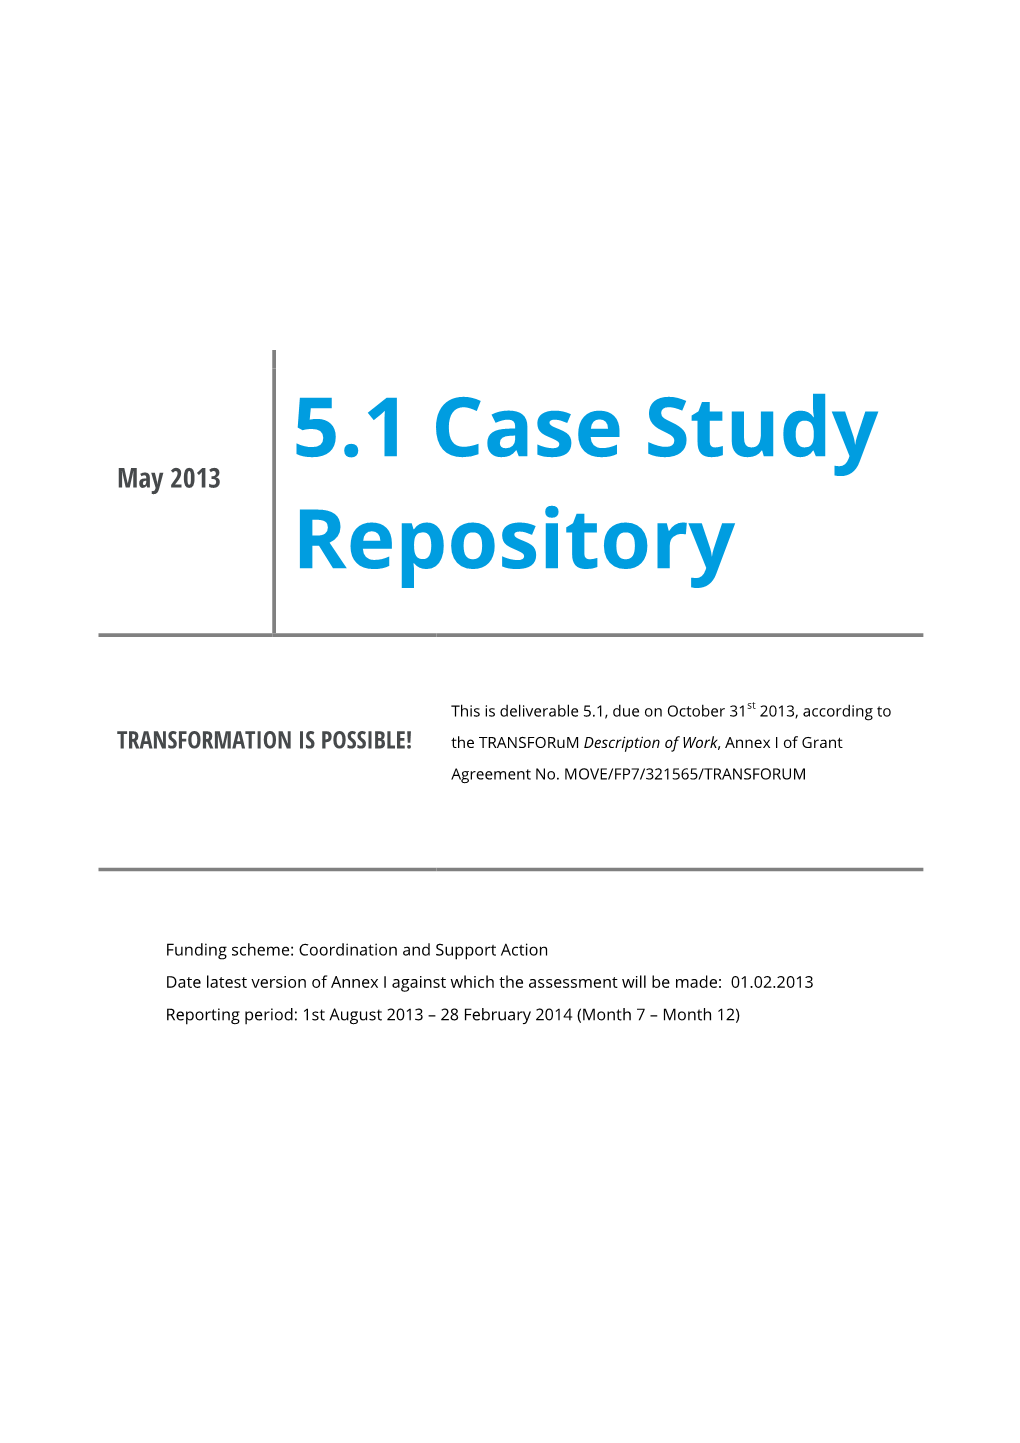 5.1 Case Study Repository